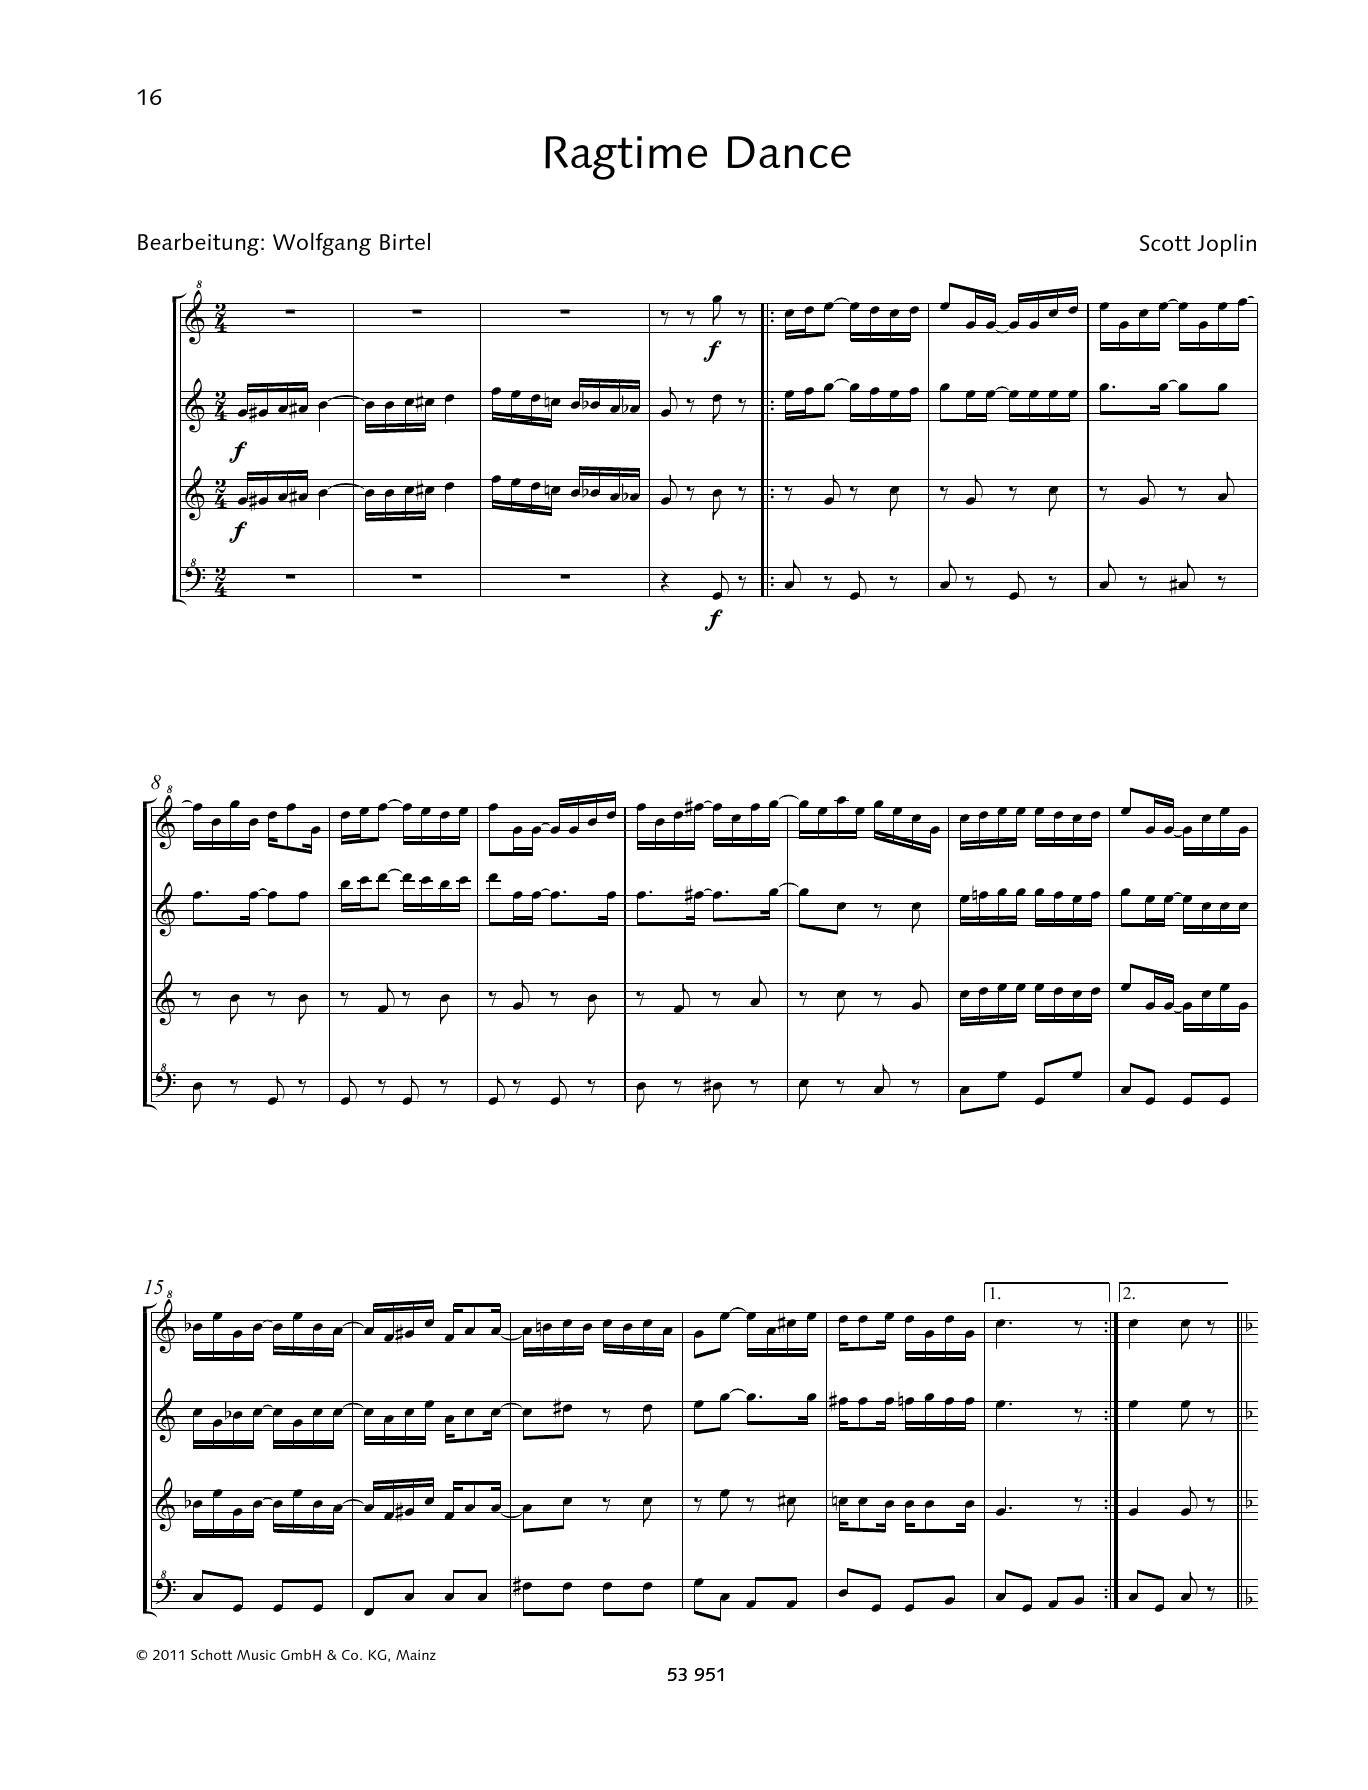 Download Scott Joplin Ragtime Dance Sheet Music and learn how to play Woodwind Ensemble PDF digital score in minutes